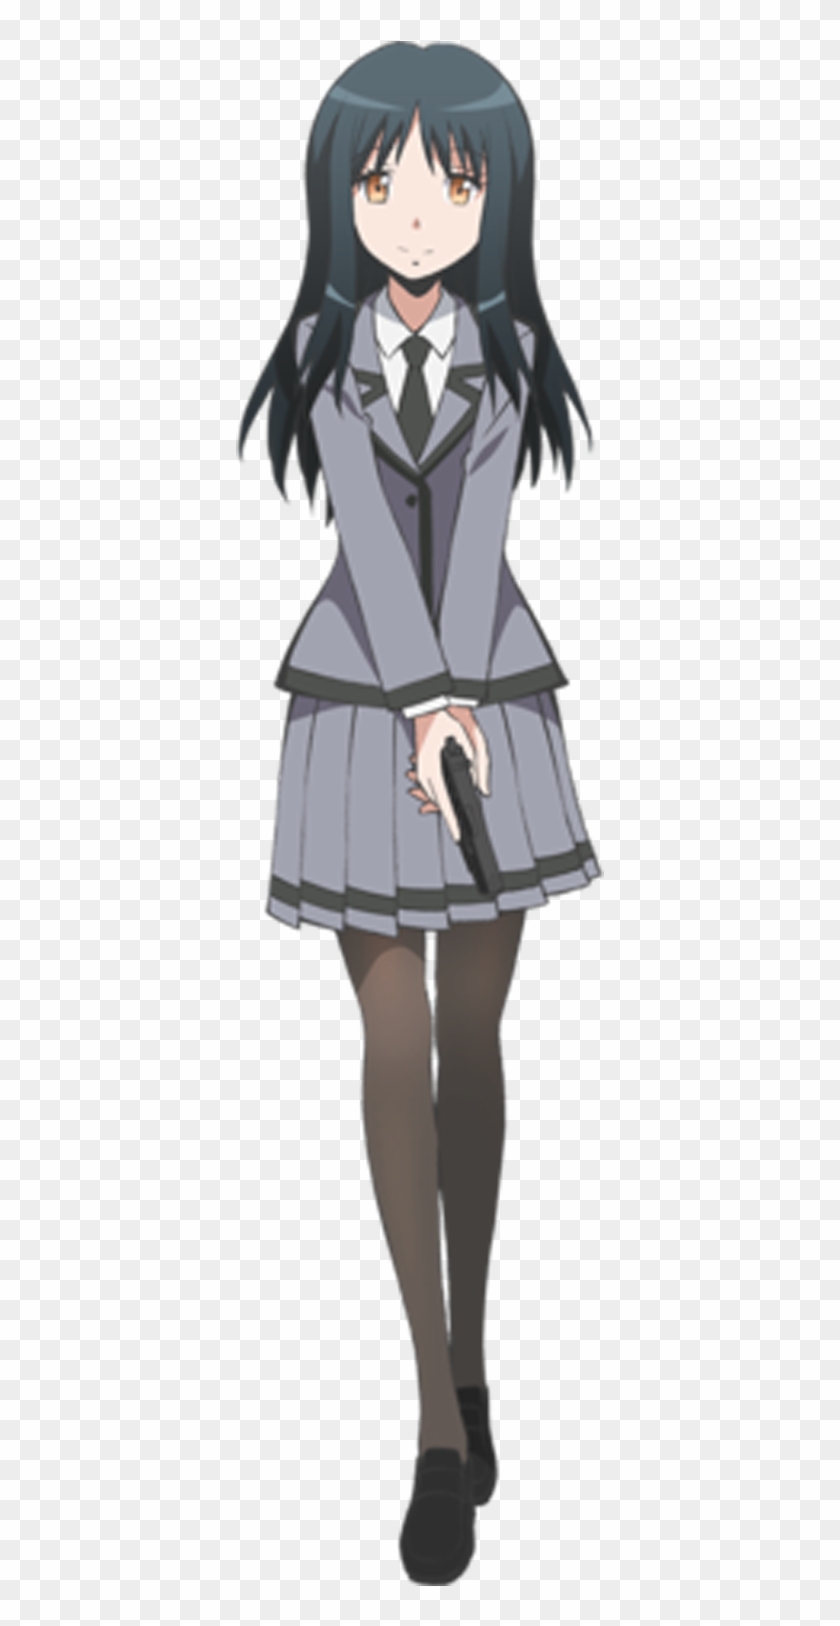 Assassin - Assassination Classroom Yukiko Kanzaki Clipart #3923458